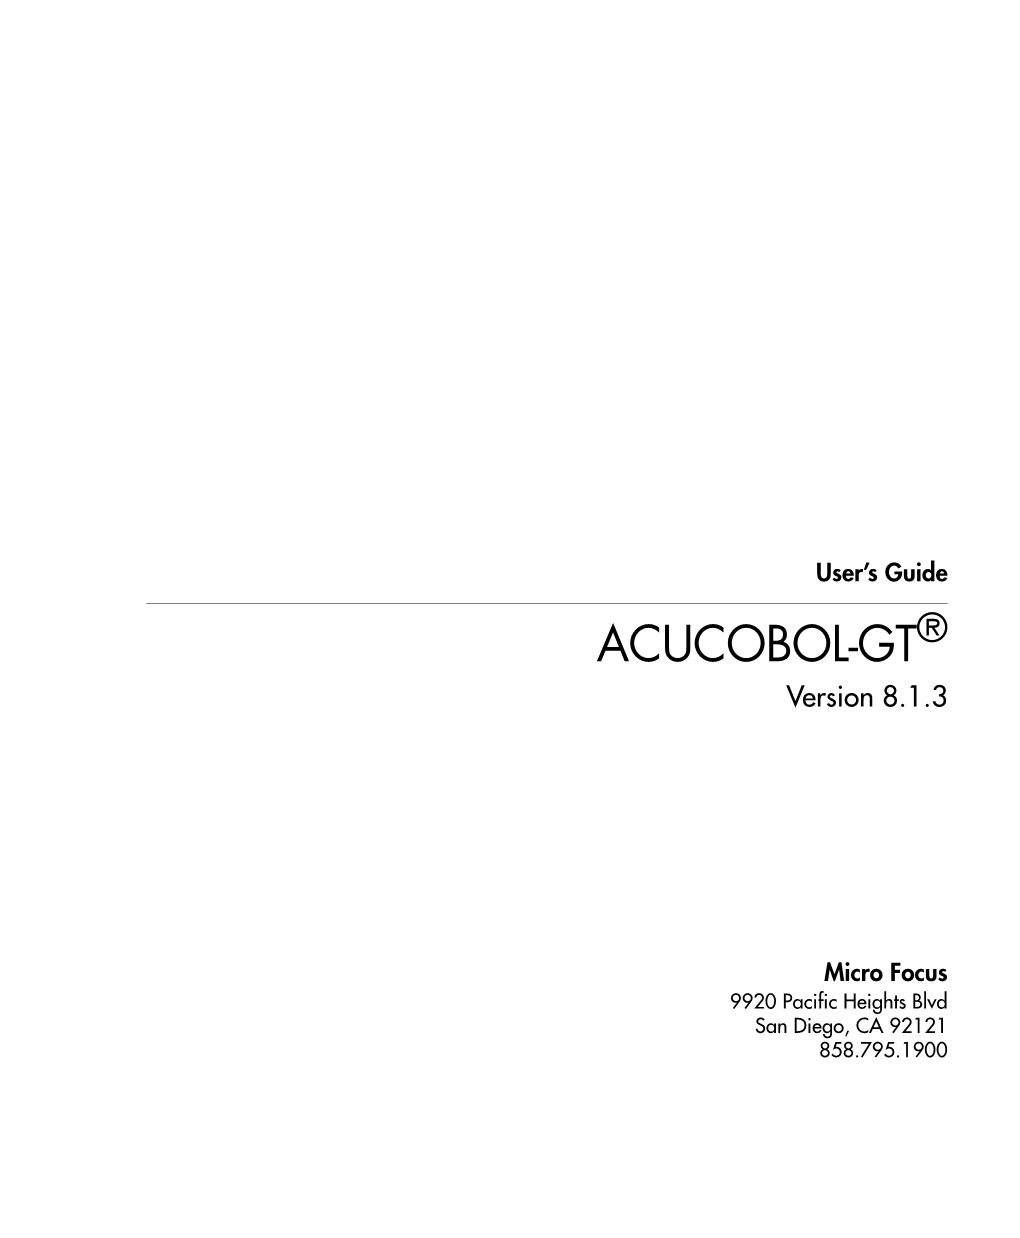 ACUCOBOL-GT® Version 8.1.3